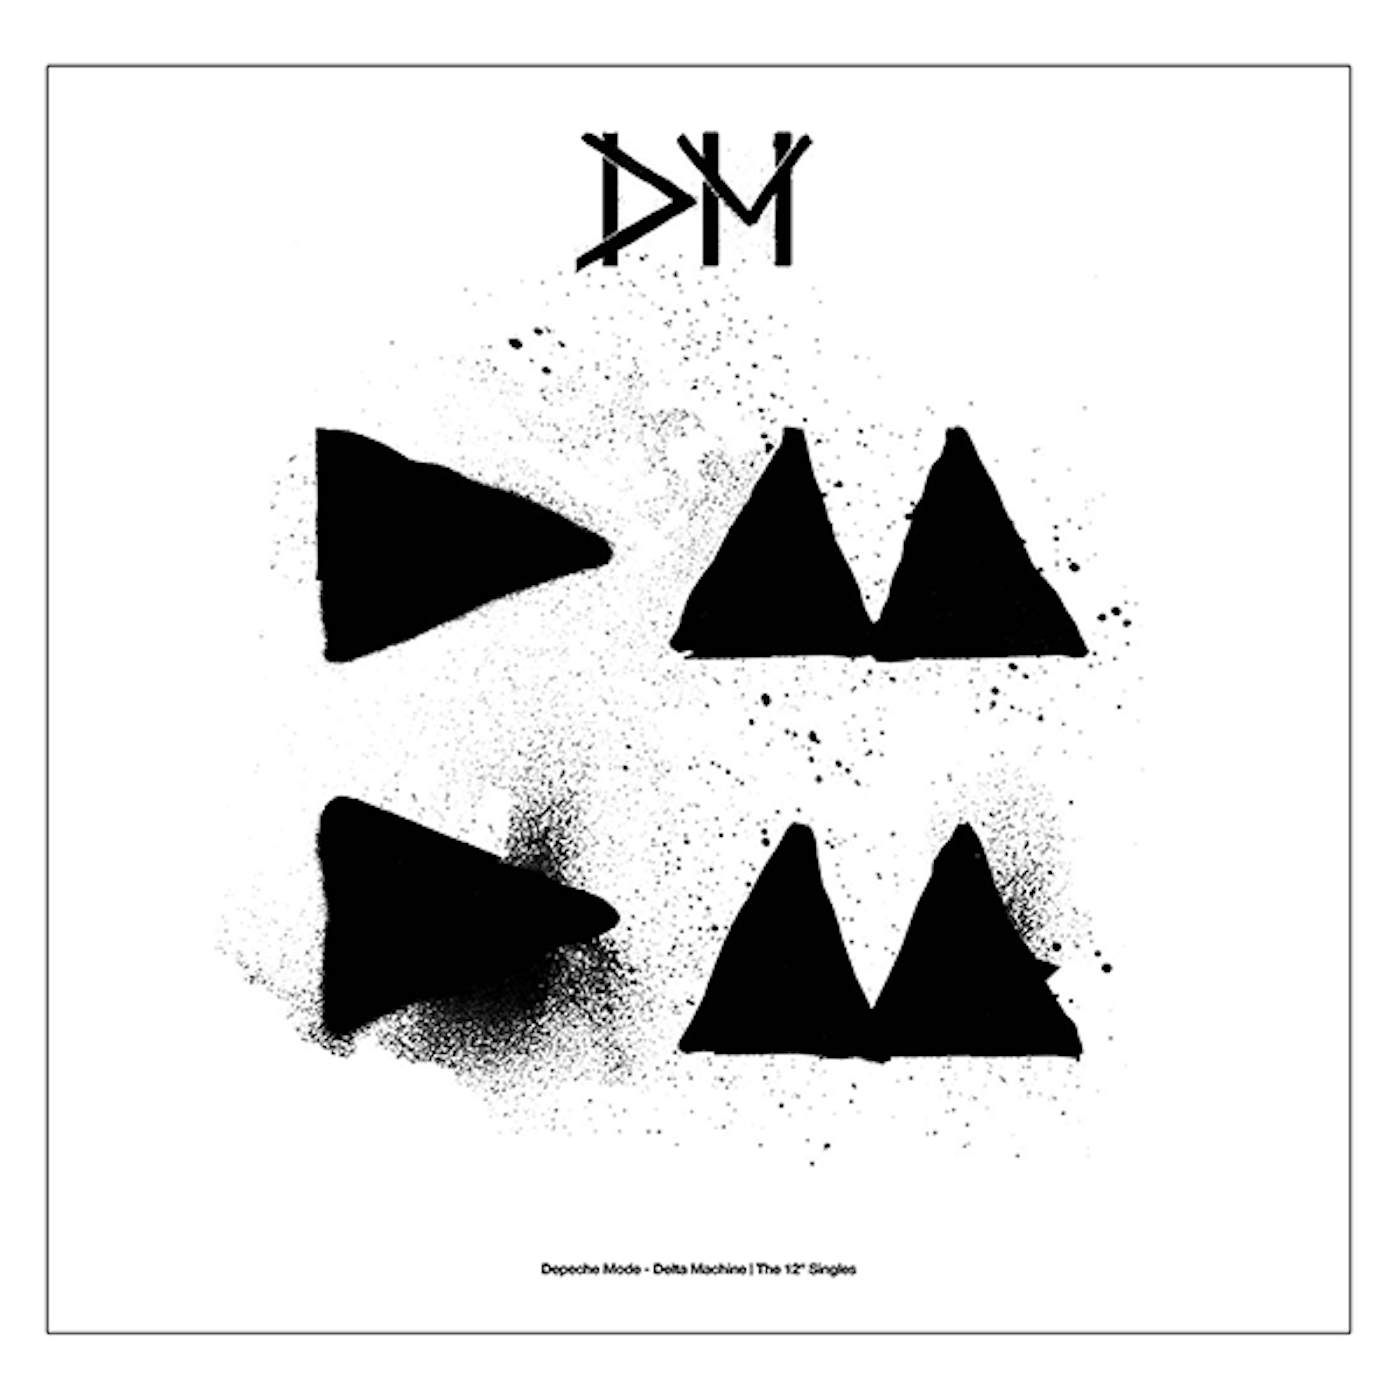 Depeche Mode - Depeche Mode 101 [Deluxe Edition Box Set] (CD